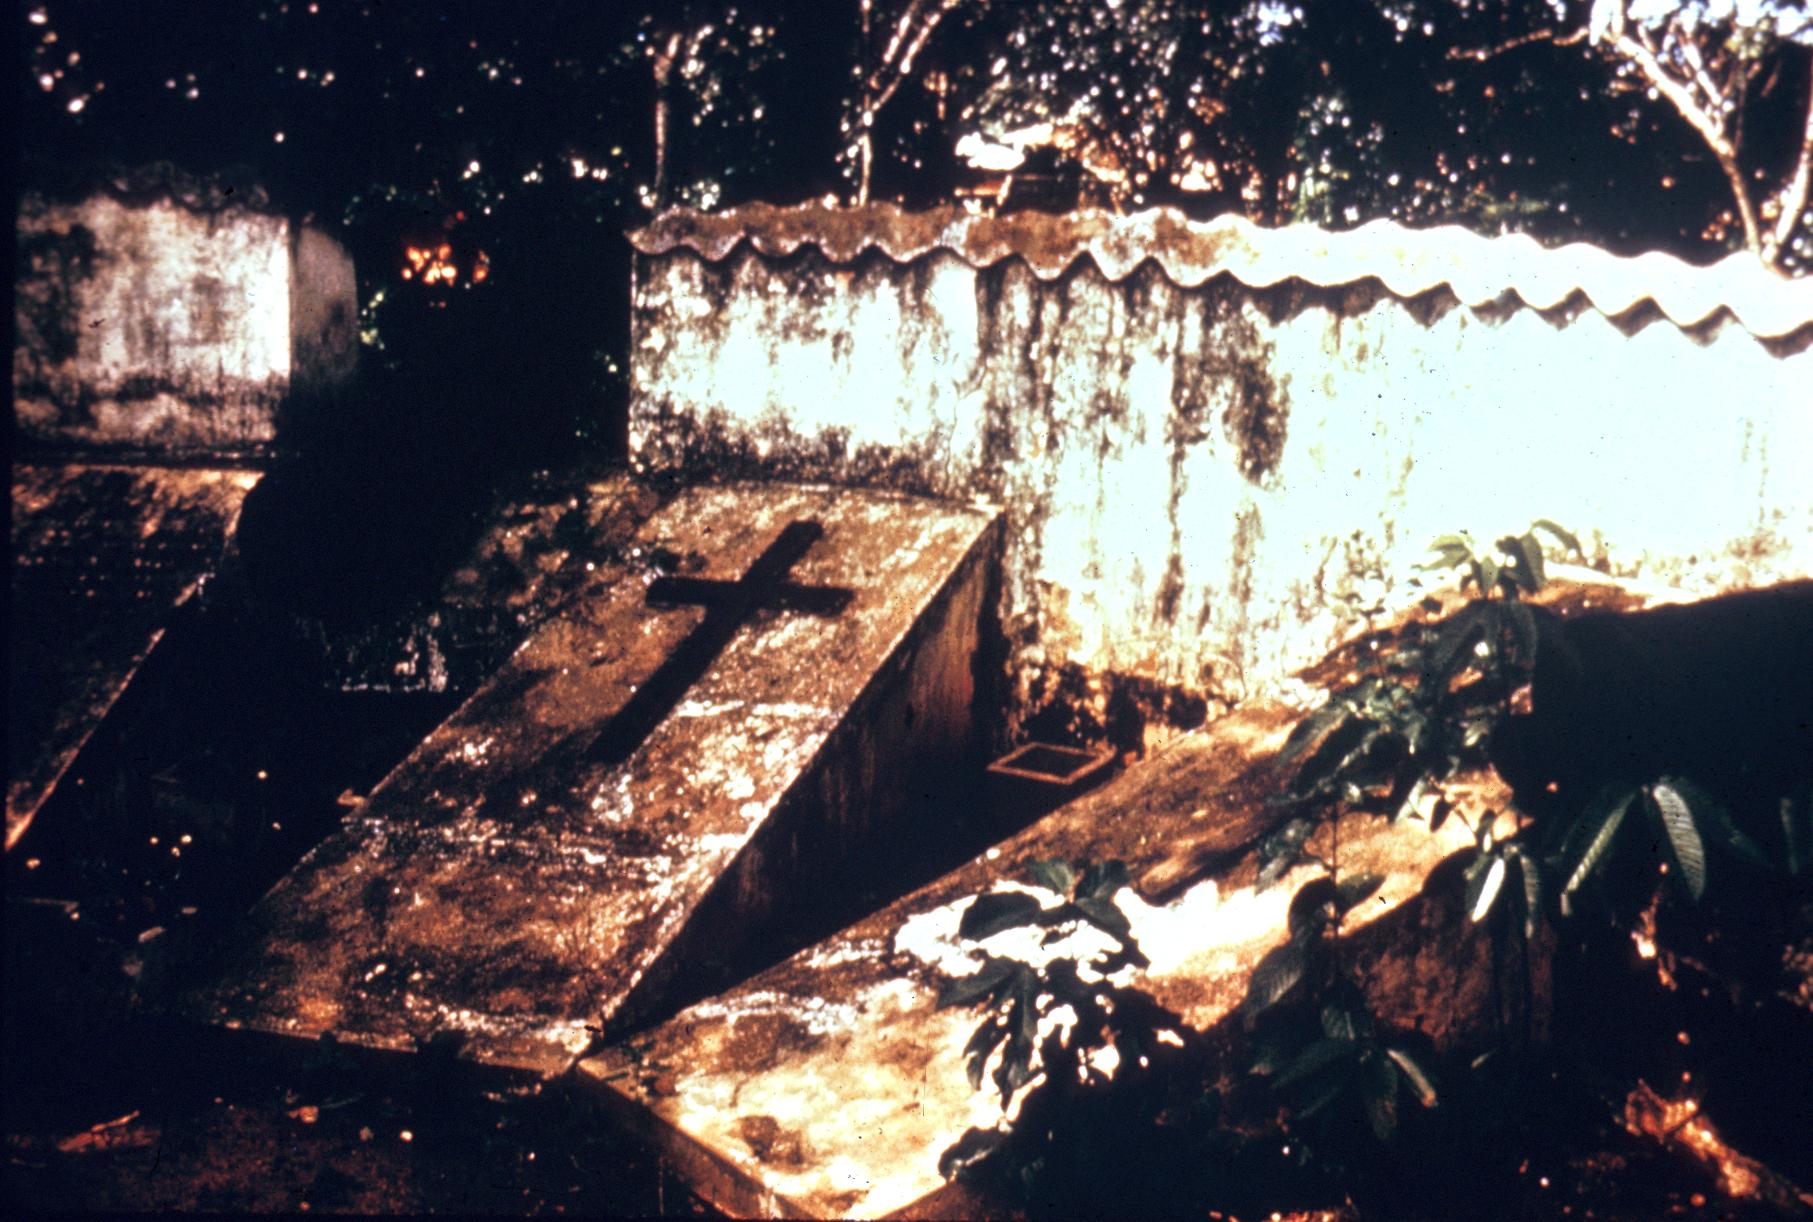 Portuguese Graves at Ouidah